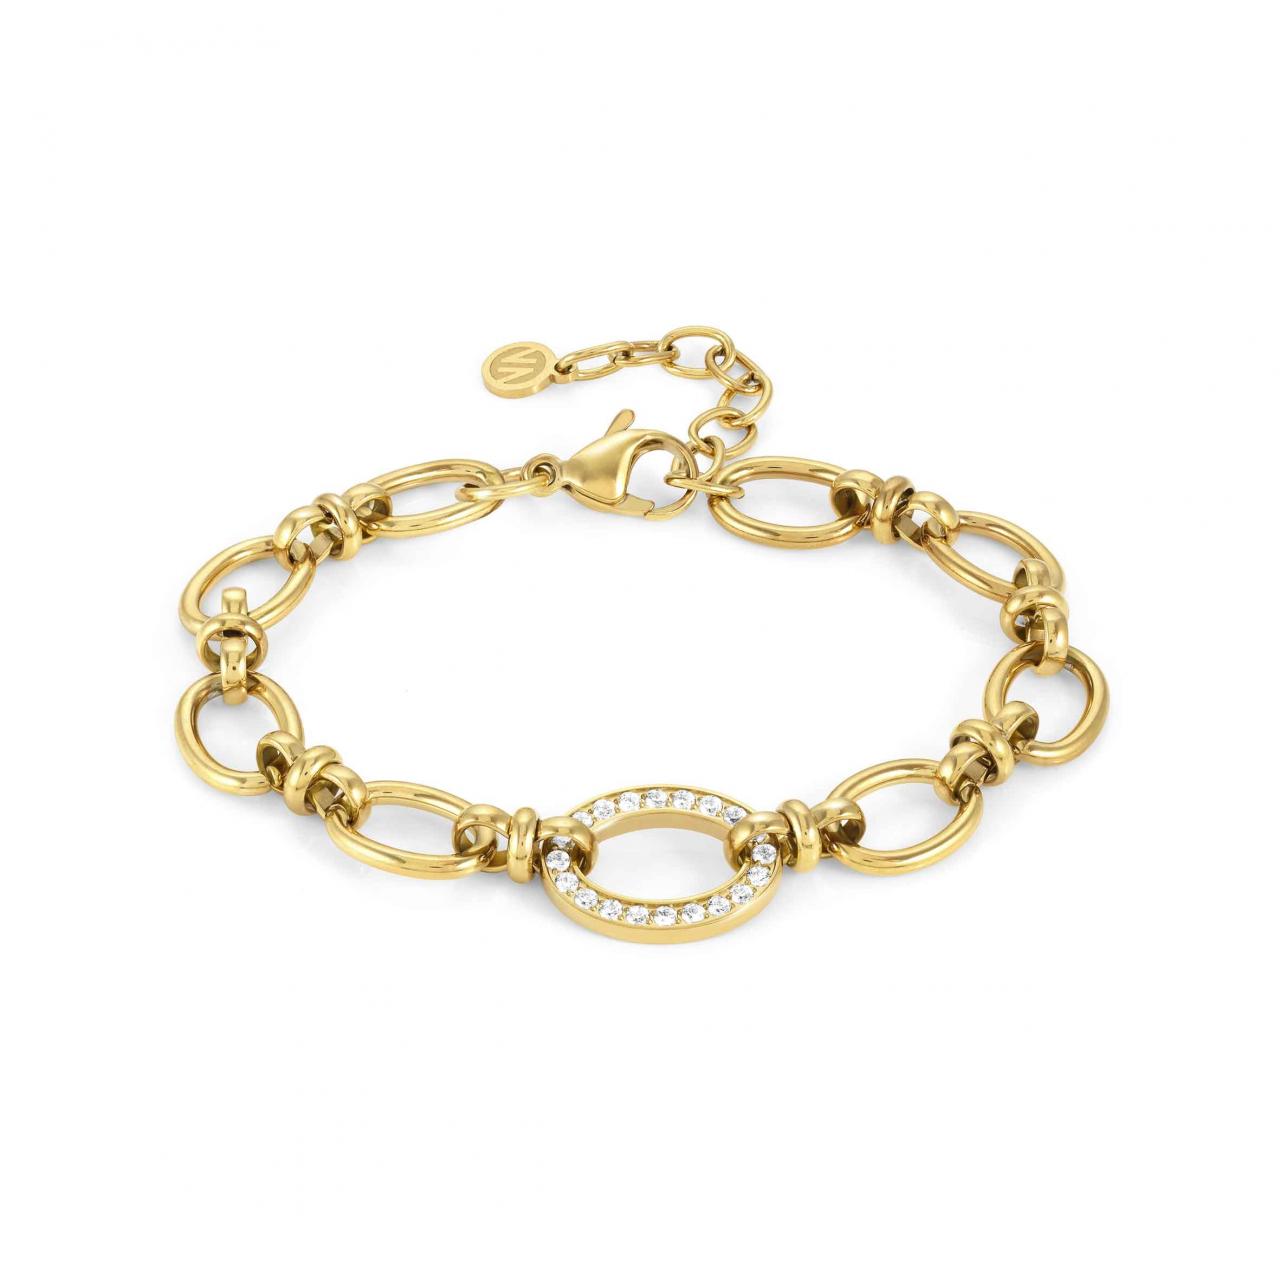 Affinity gold steel chain bracelet